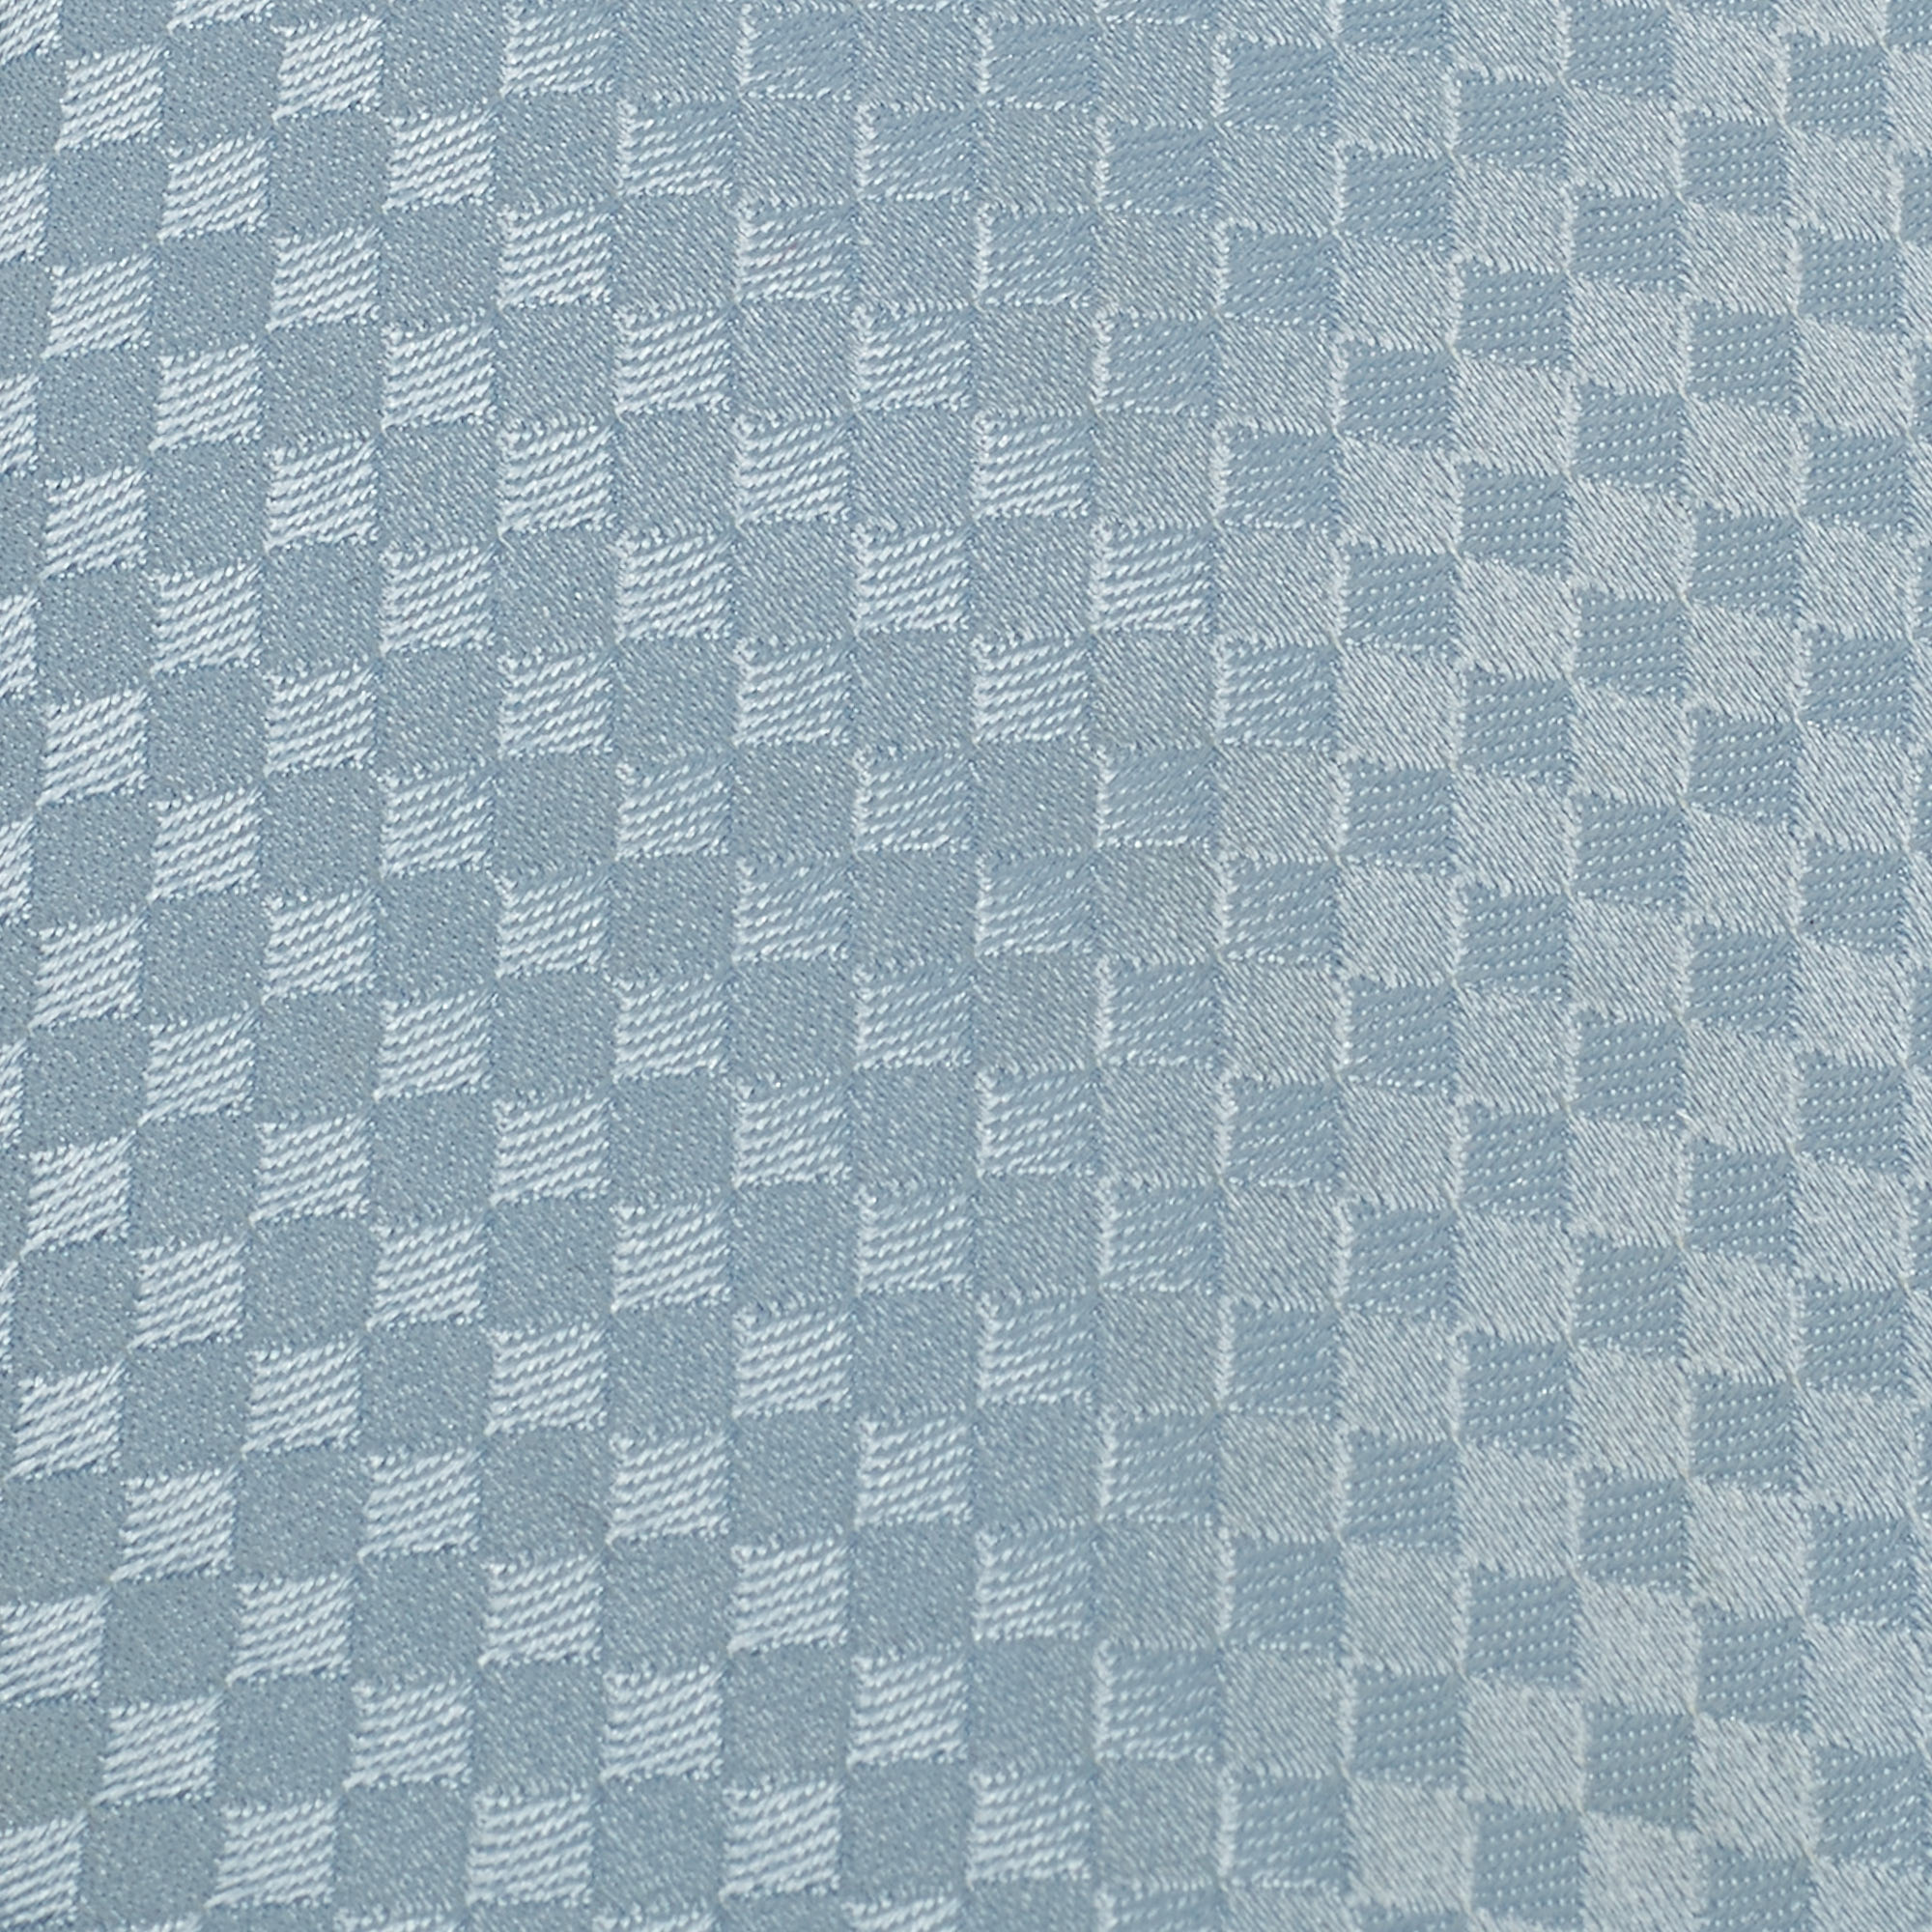 Louis Vuitton Damier Checkerboard Patterned Silk Jacquard Tie